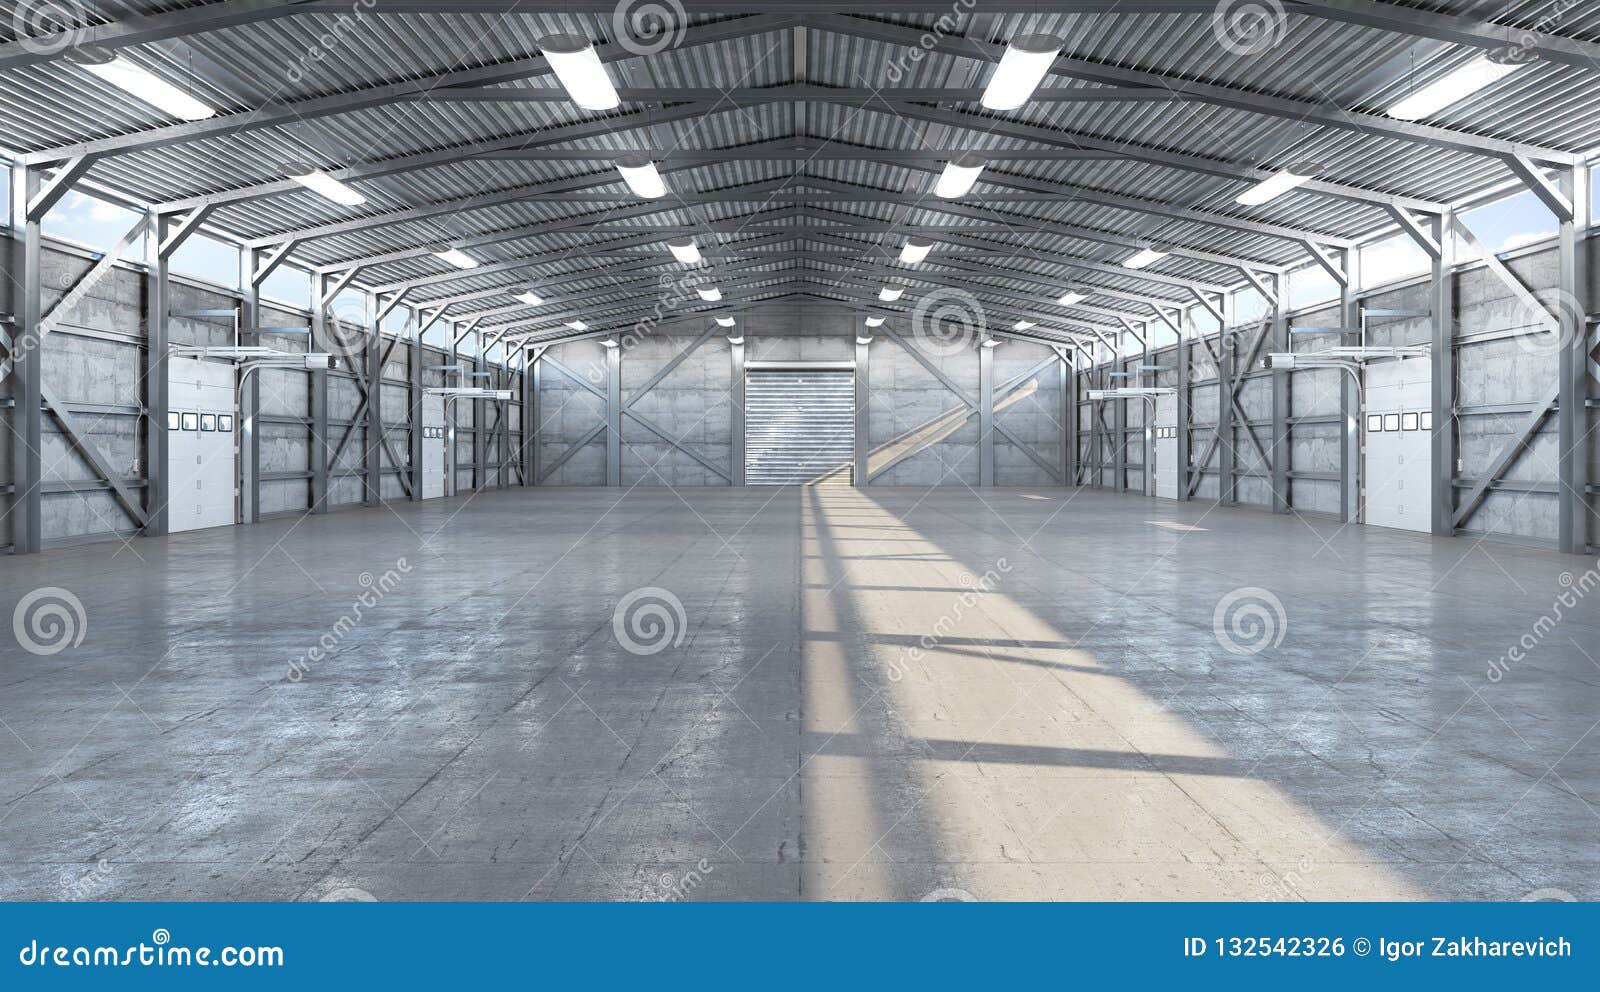 hangar interior with gate.